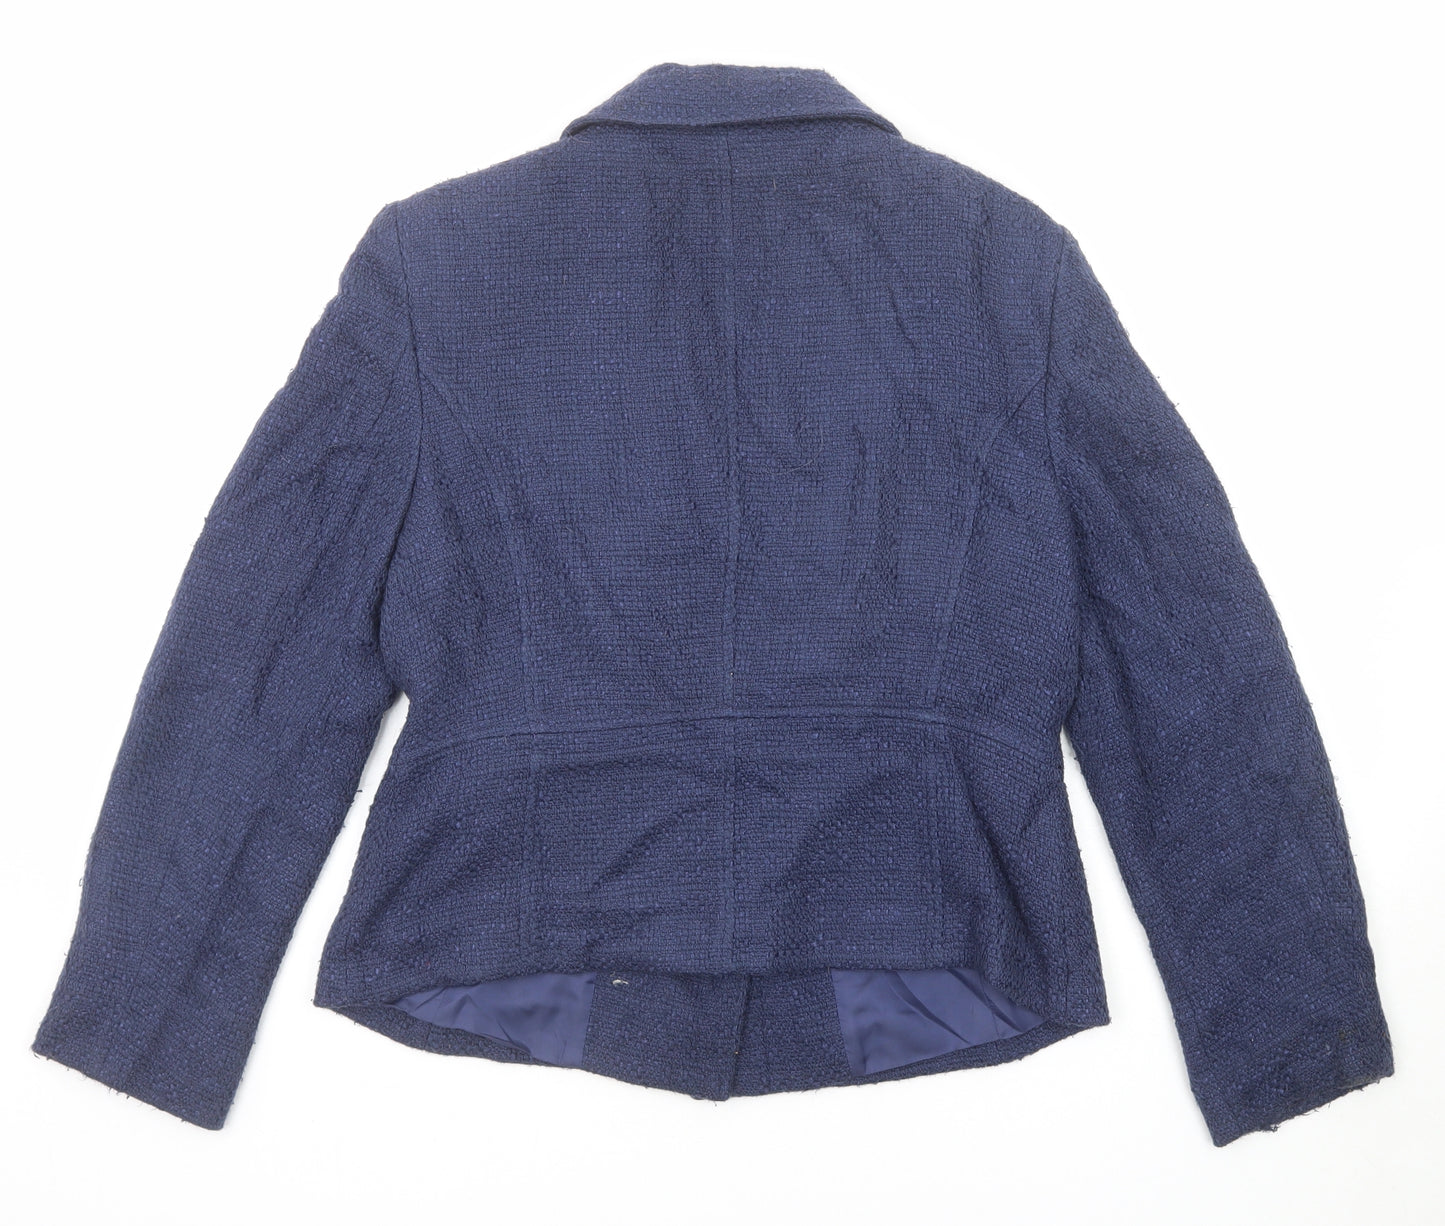 Viyella Womens Blue Jacket Blazer Size 12 Button